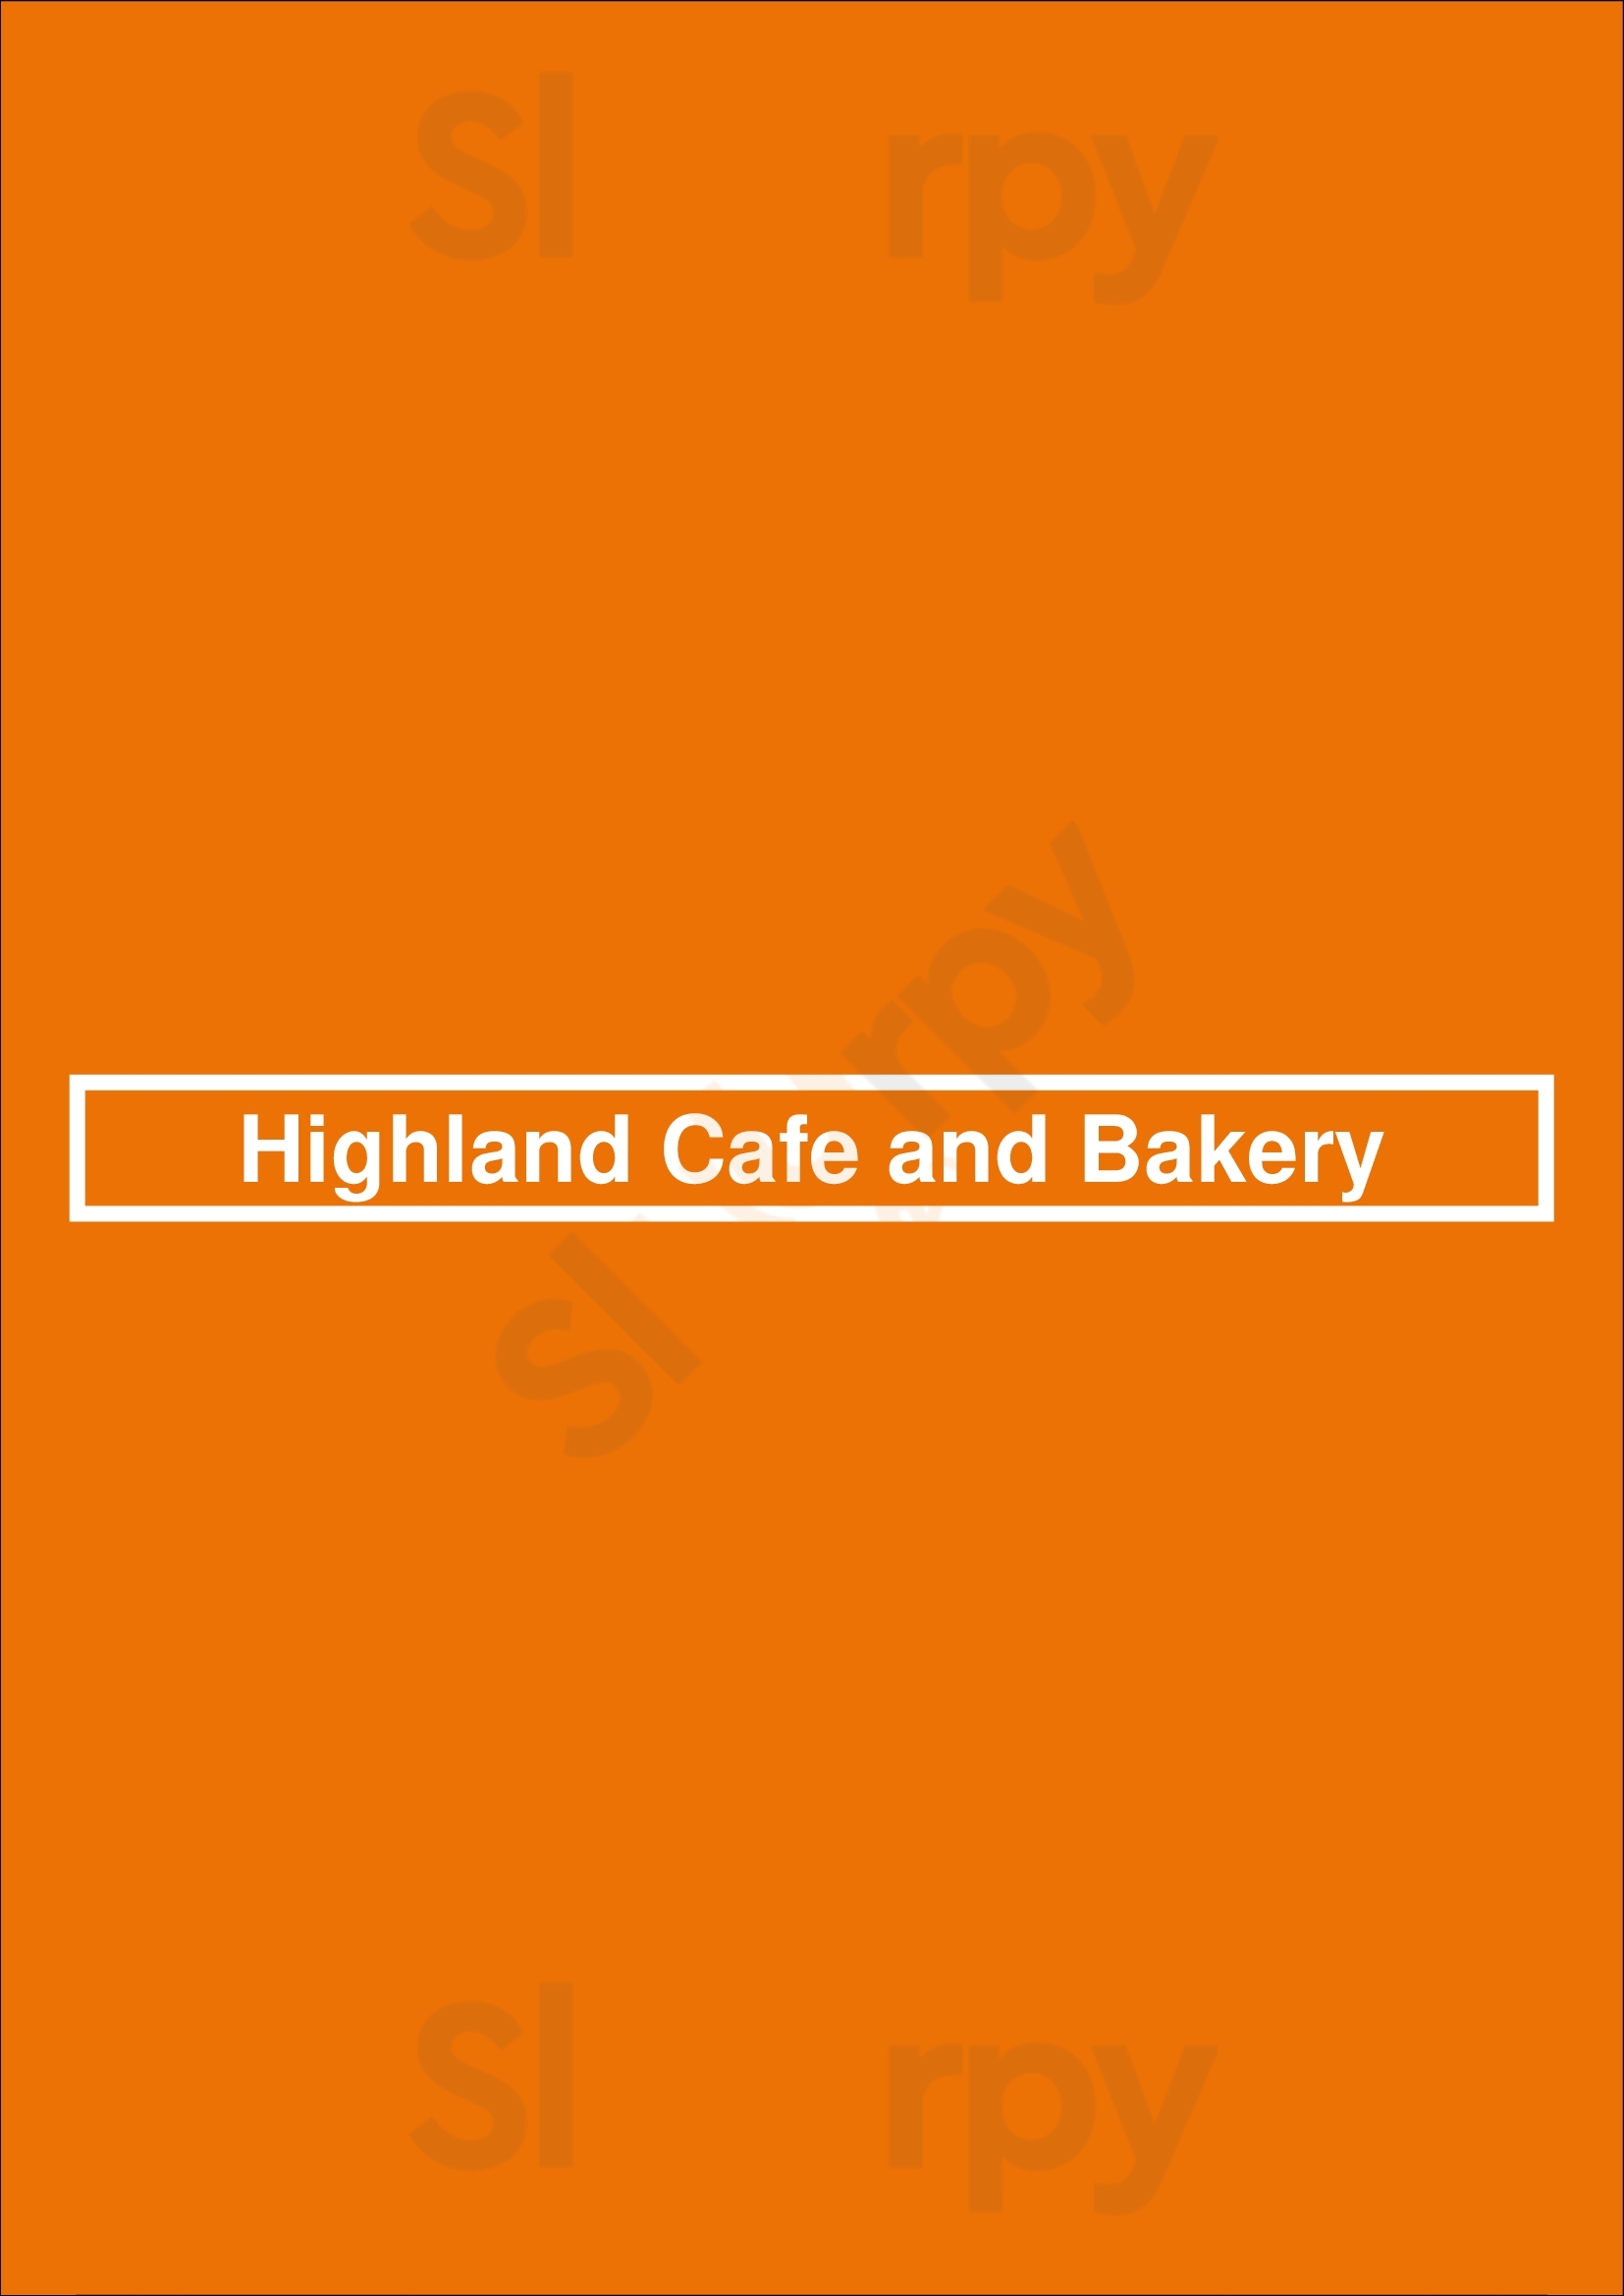 Highland Cafe And Bakery Saint Paul Menu - 1